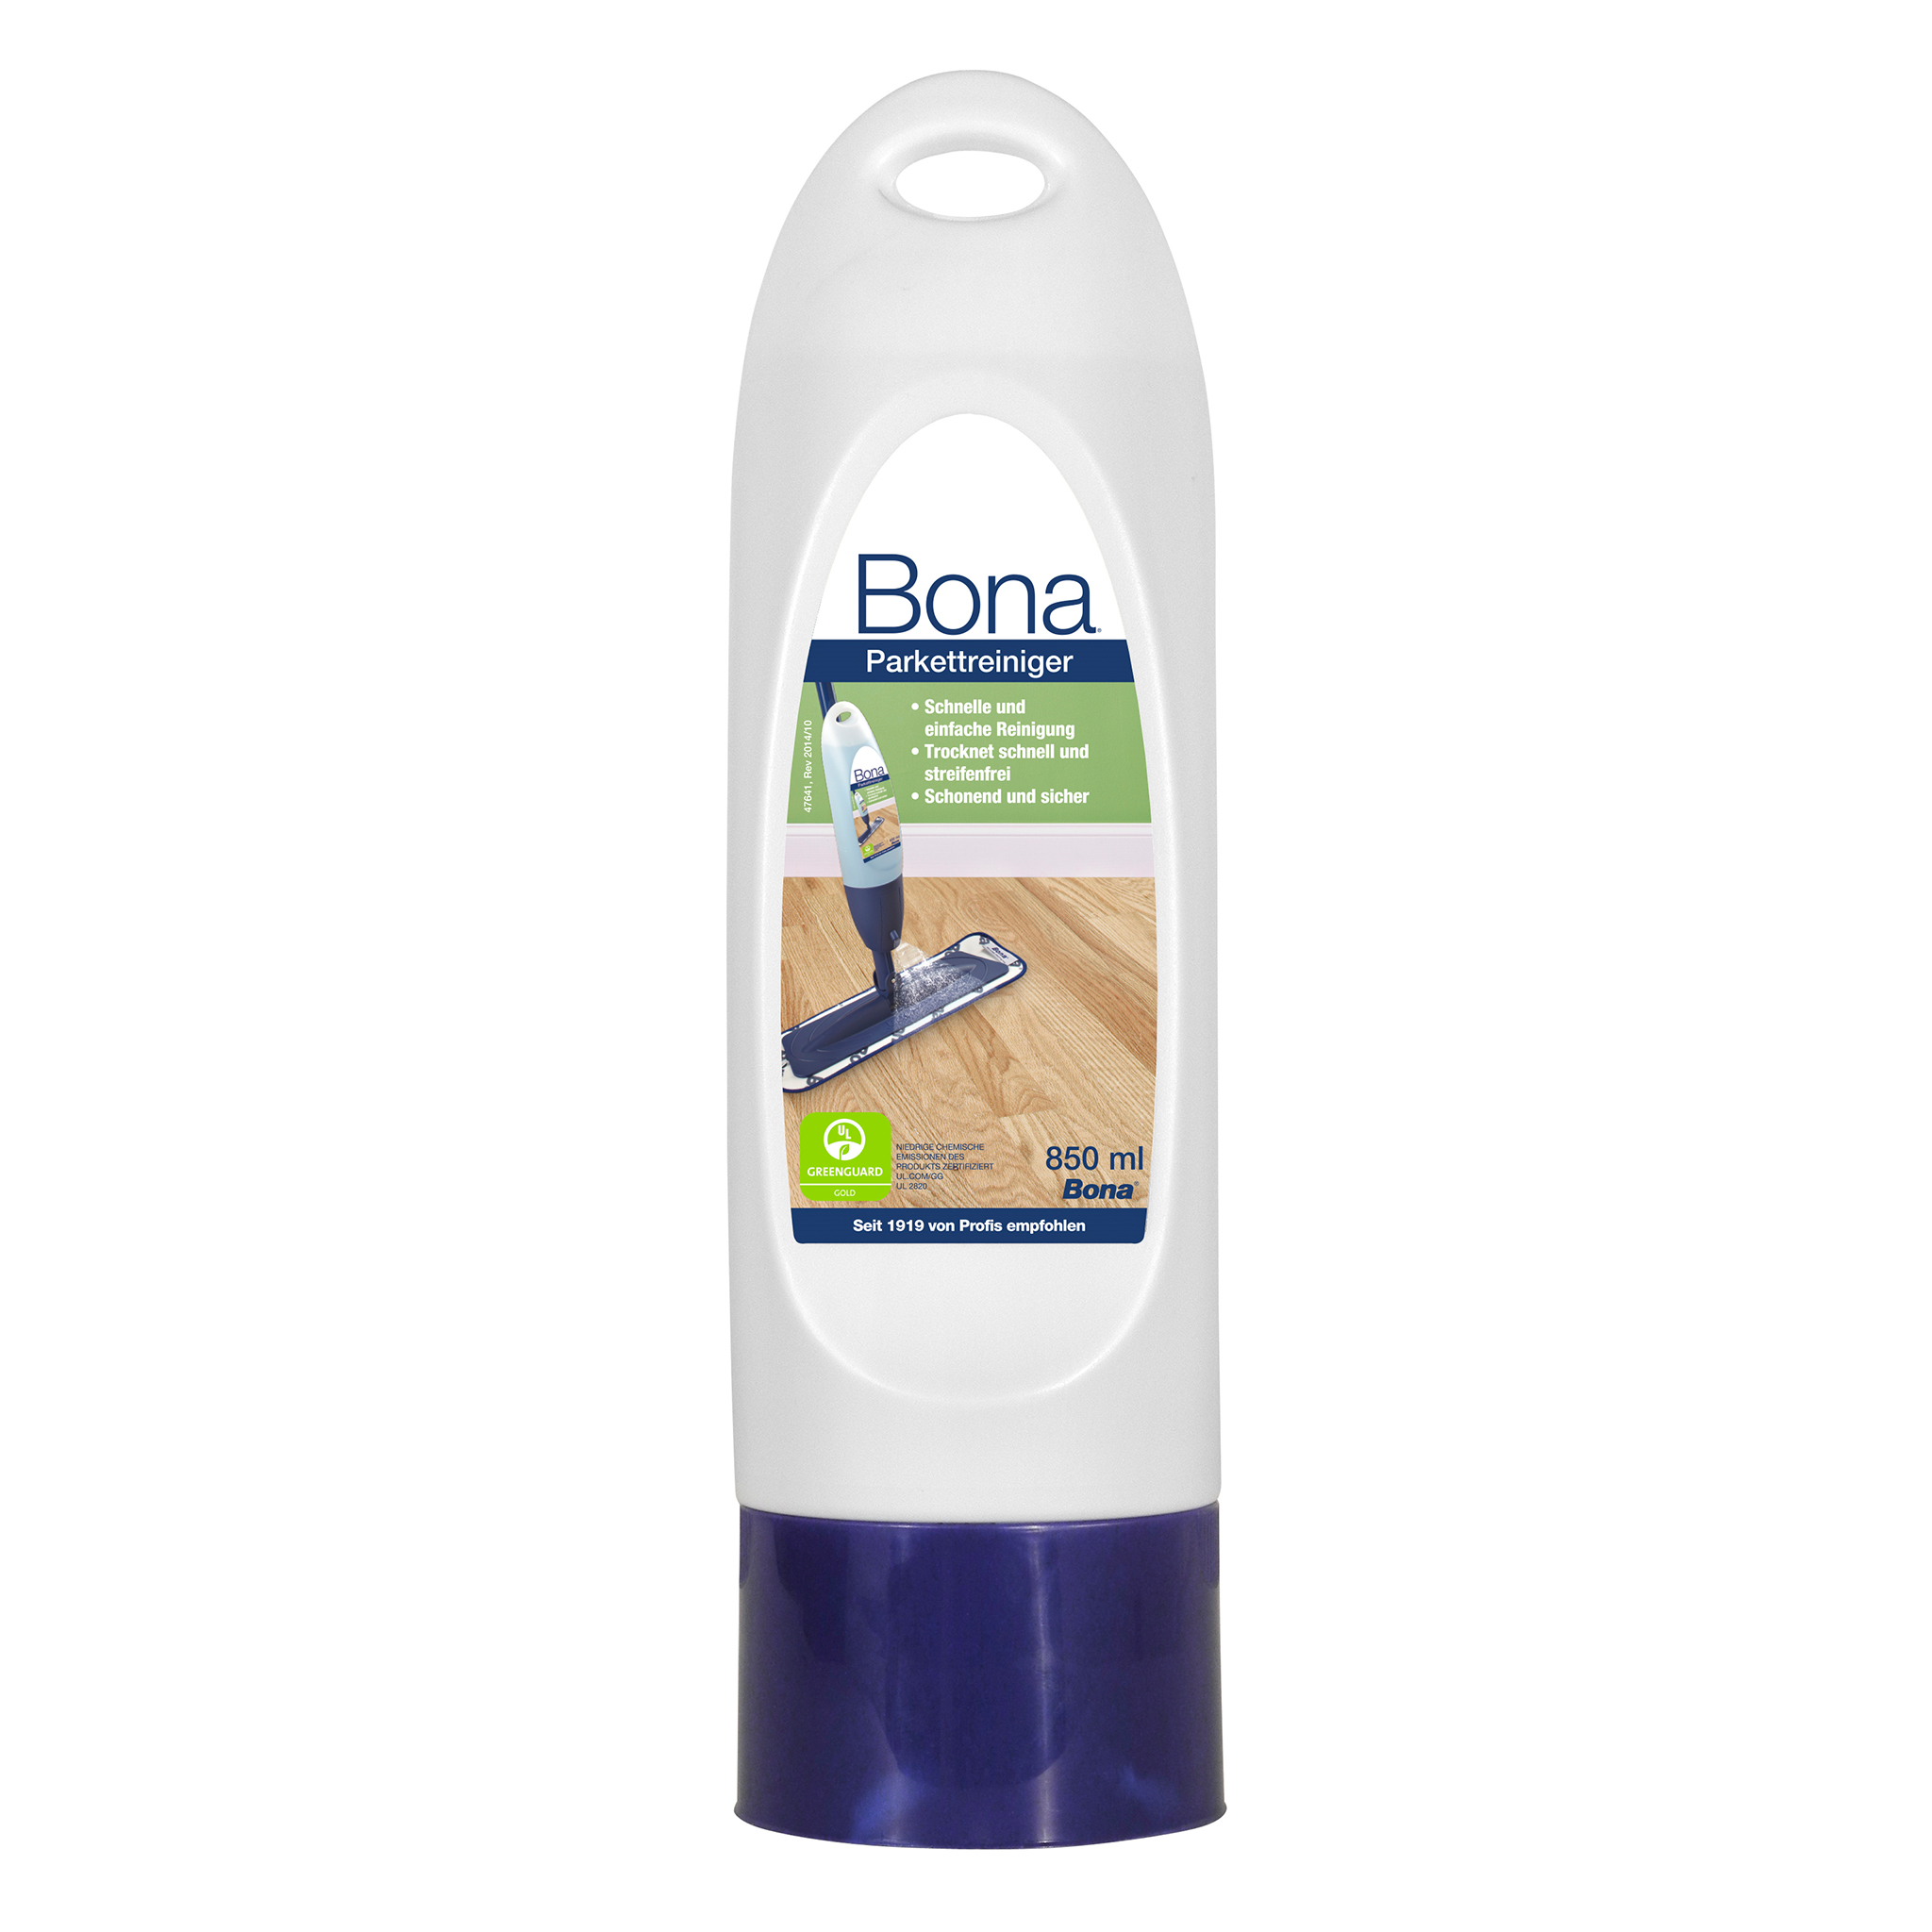 Bona spray mop with cartridge and fleece